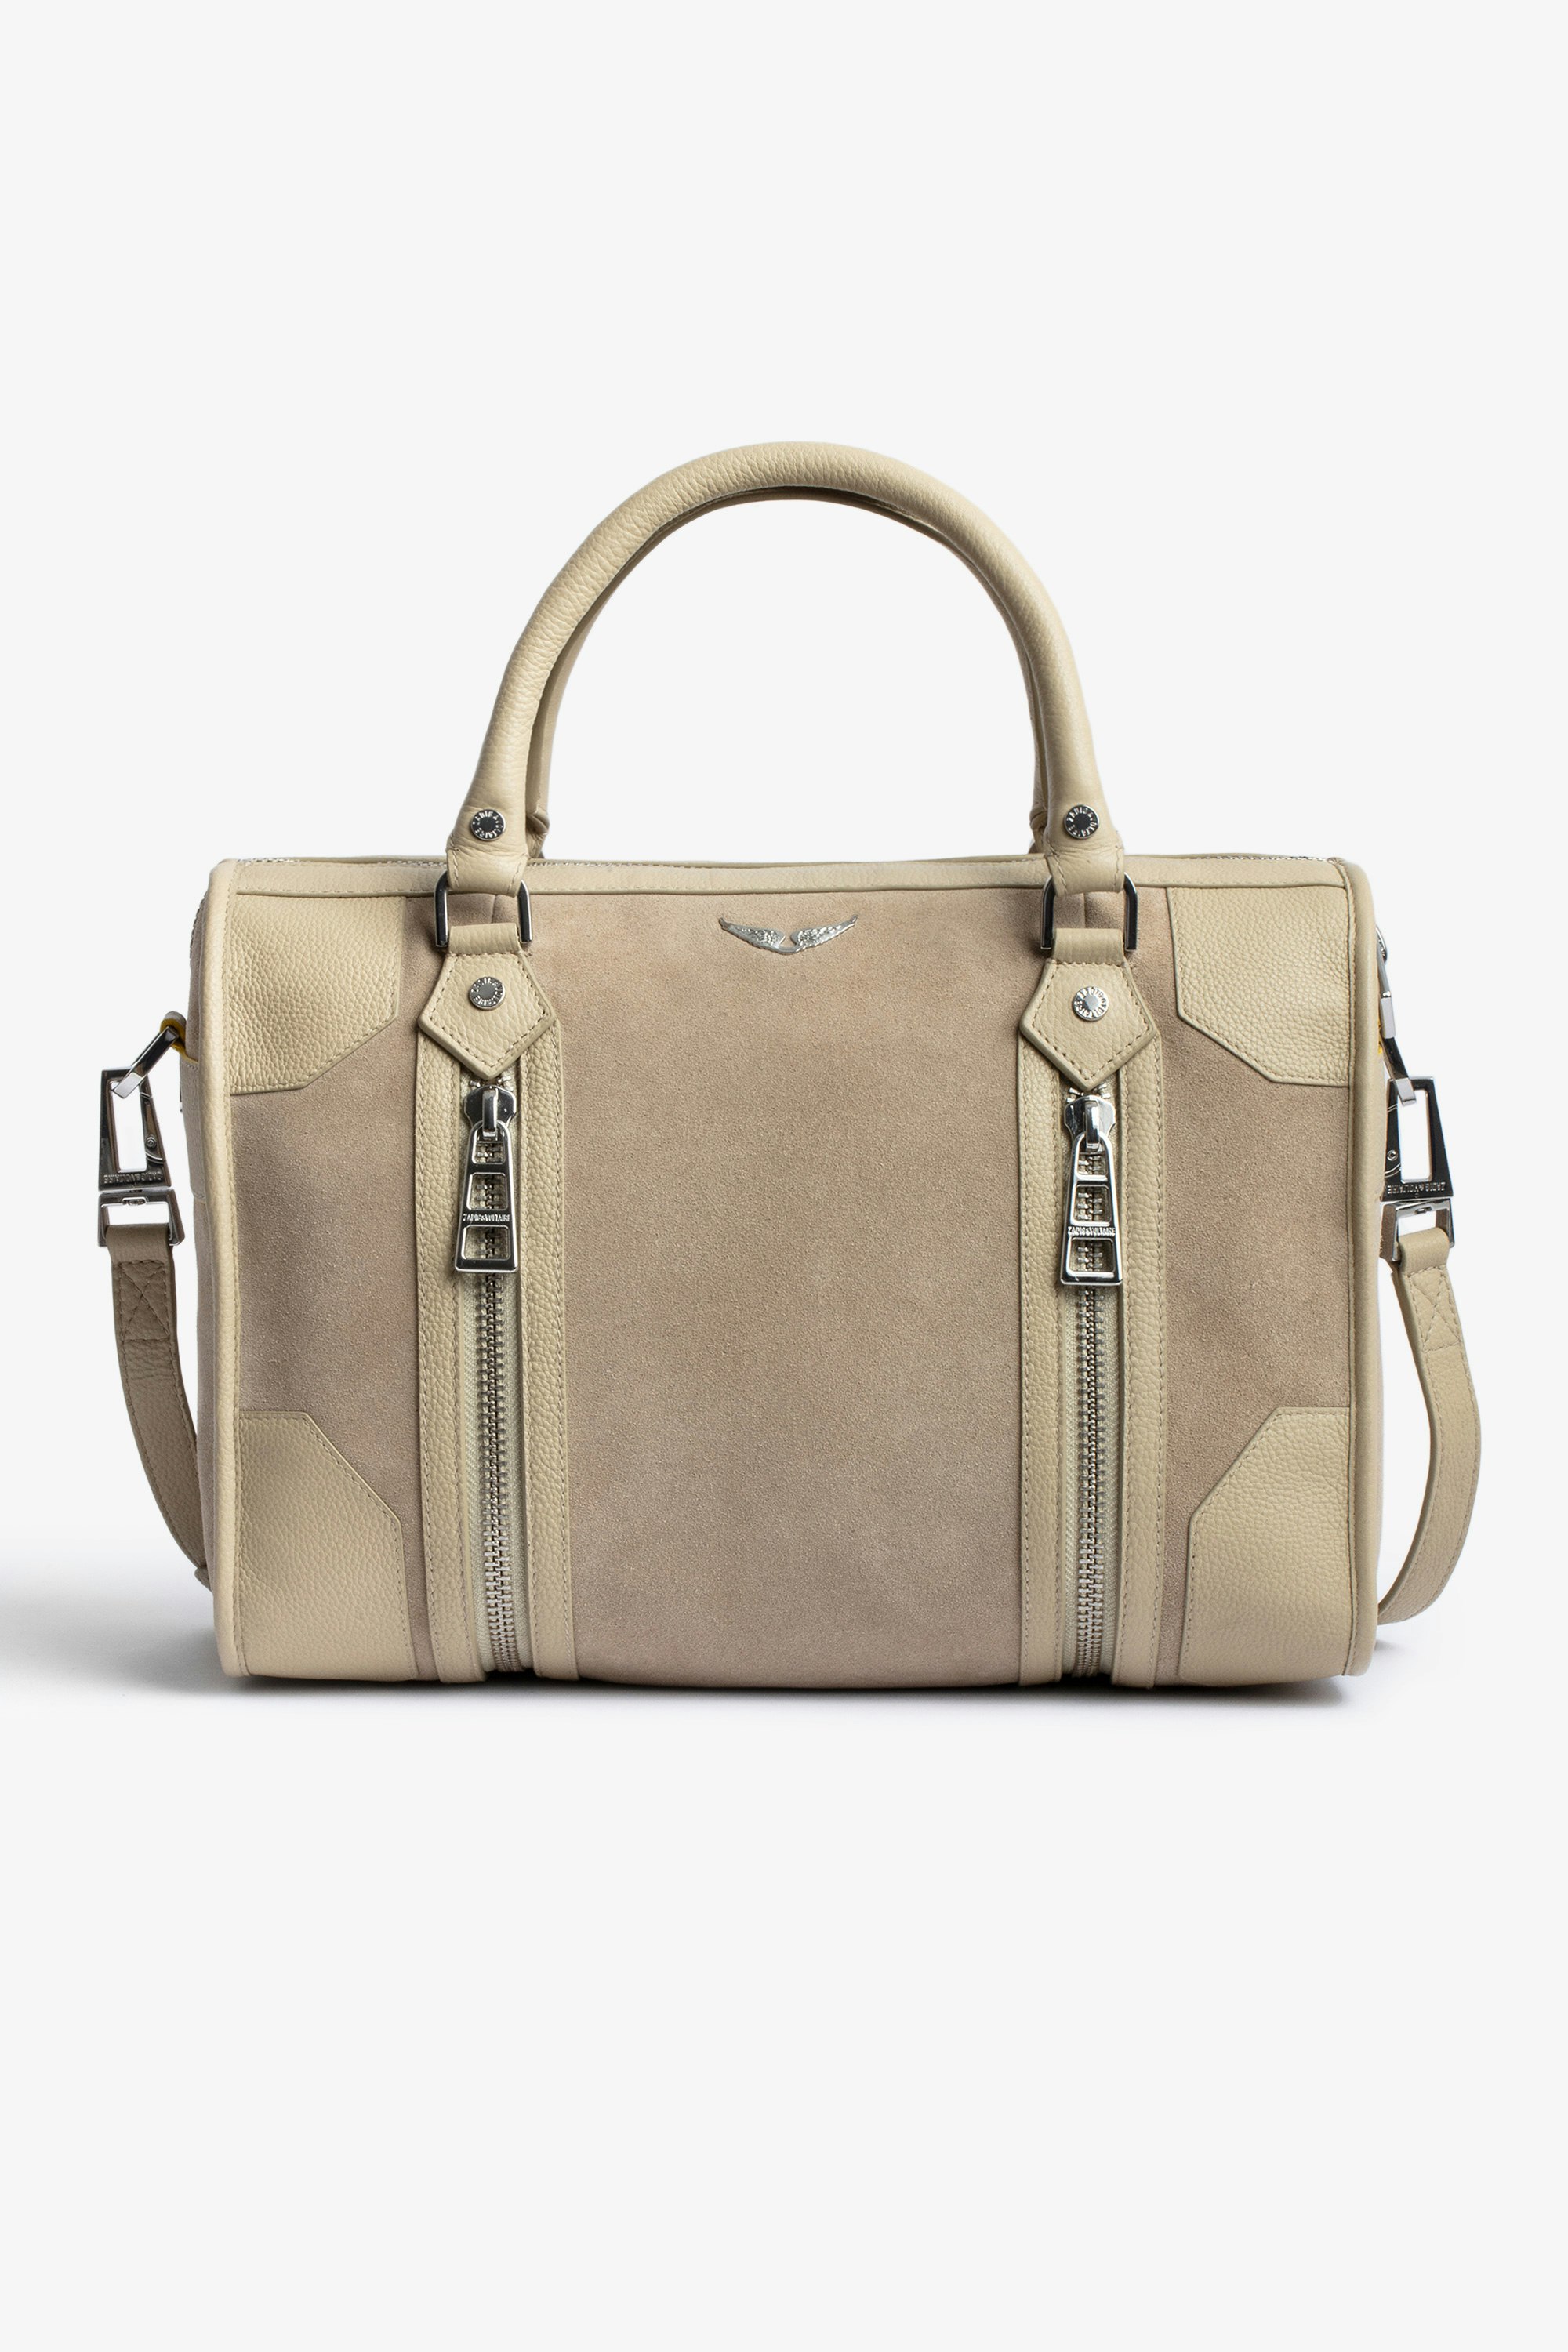 Sunny Medium #2 Bag Women’s medium zipped bag in beige suede with a shoulder strap